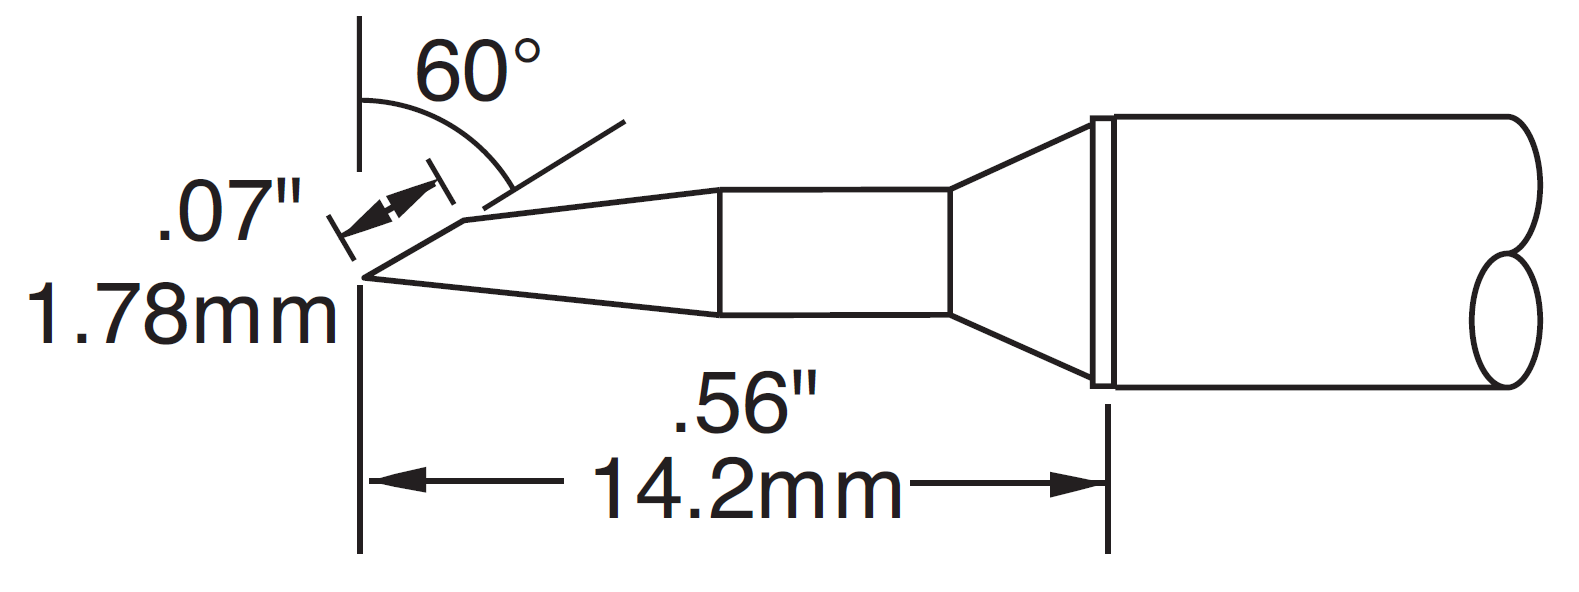 Картридж-наконечник для СV/MX, скос 60° удлиненный, 1.78х14.2мм (замена STTC-147)